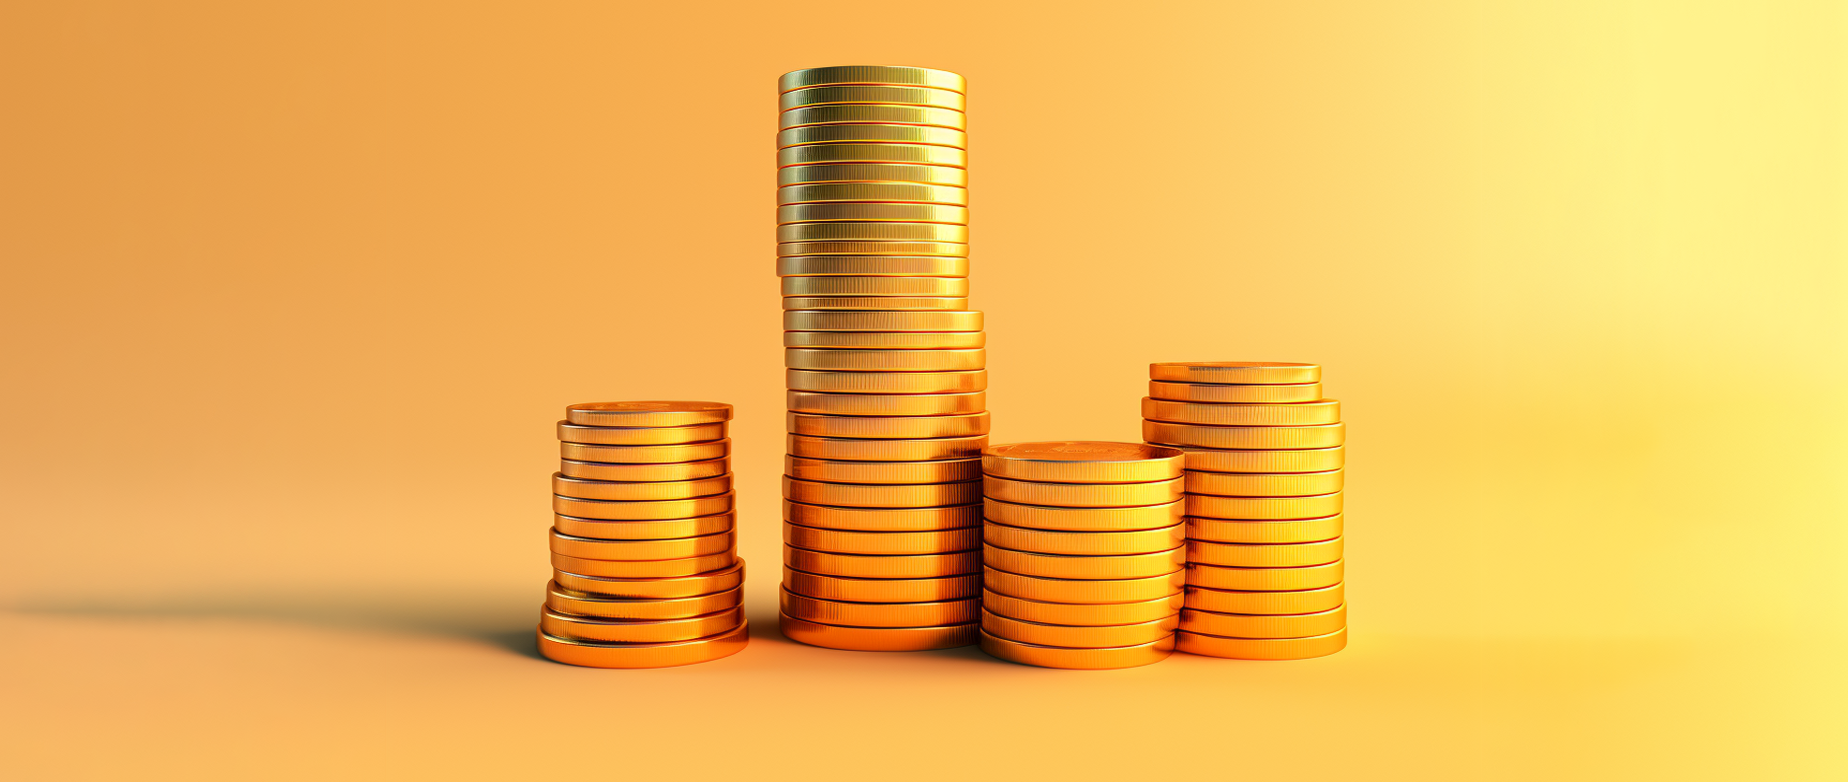 Stacks of gold coins on a light orange background.